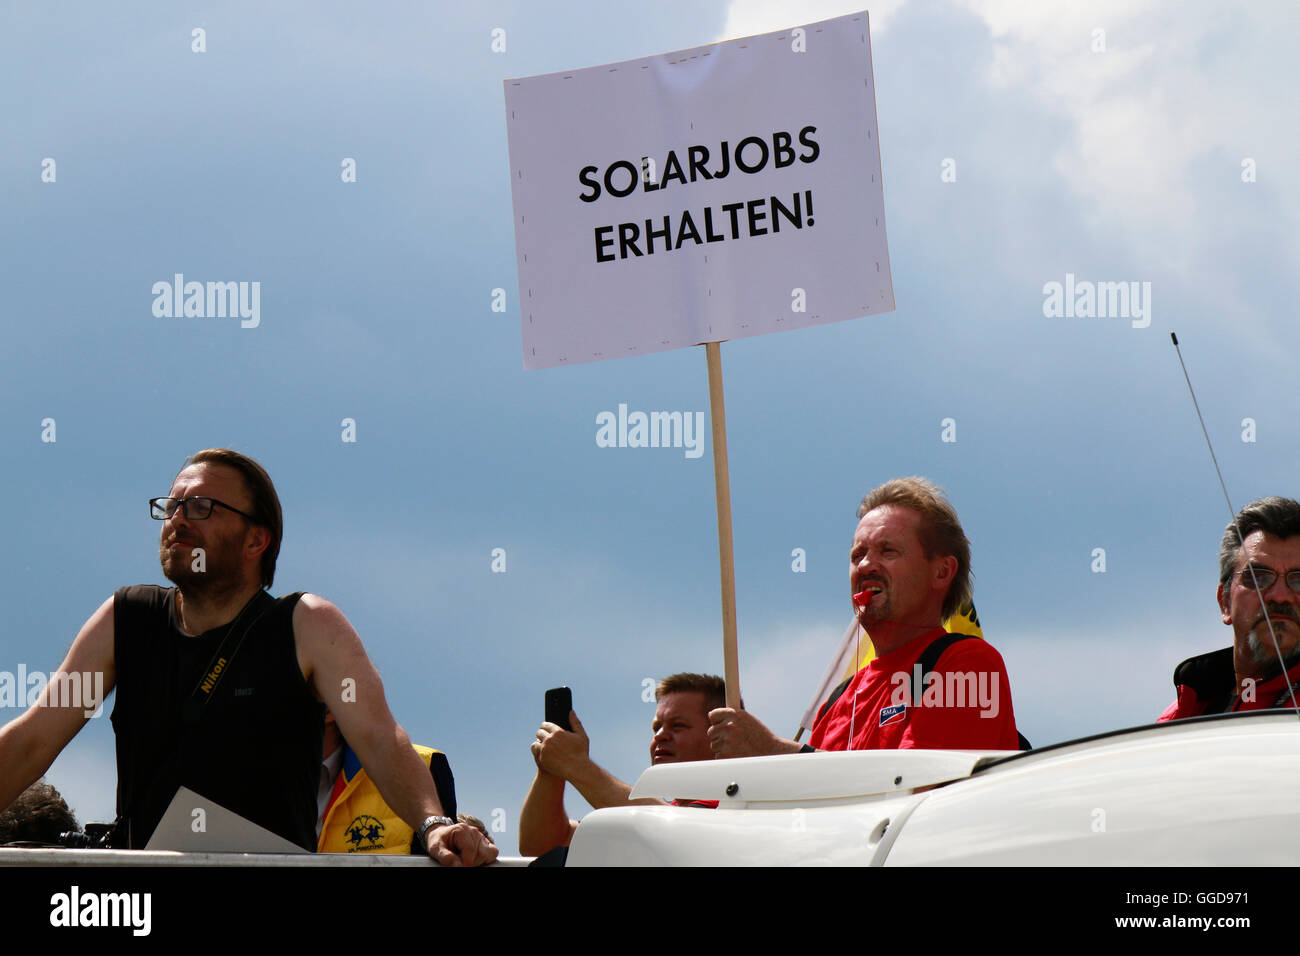 'Solarjobs erhalten' - Protestplakat auf dimostrazione fuer Energien rigenerativa, 2. Juni 2016, Berlin-Tiergarten. Foto Stock